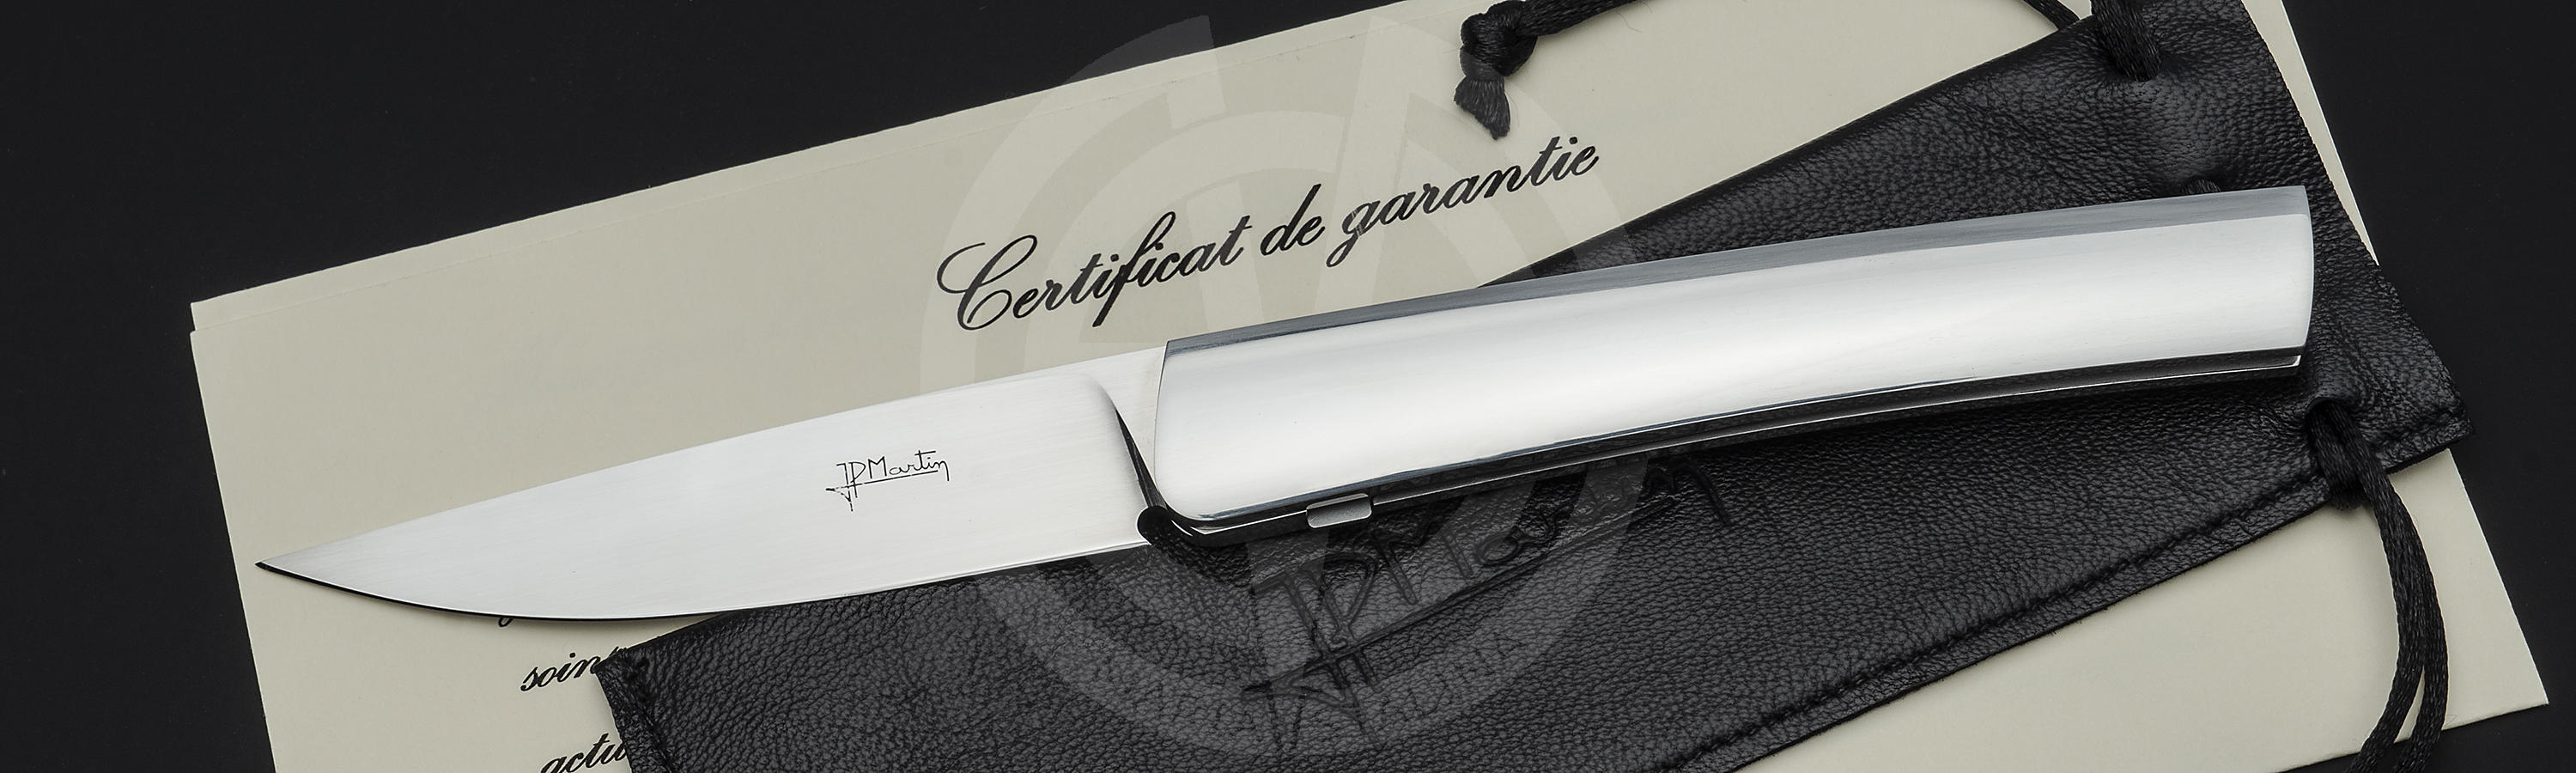 Сертификат ножа Basic